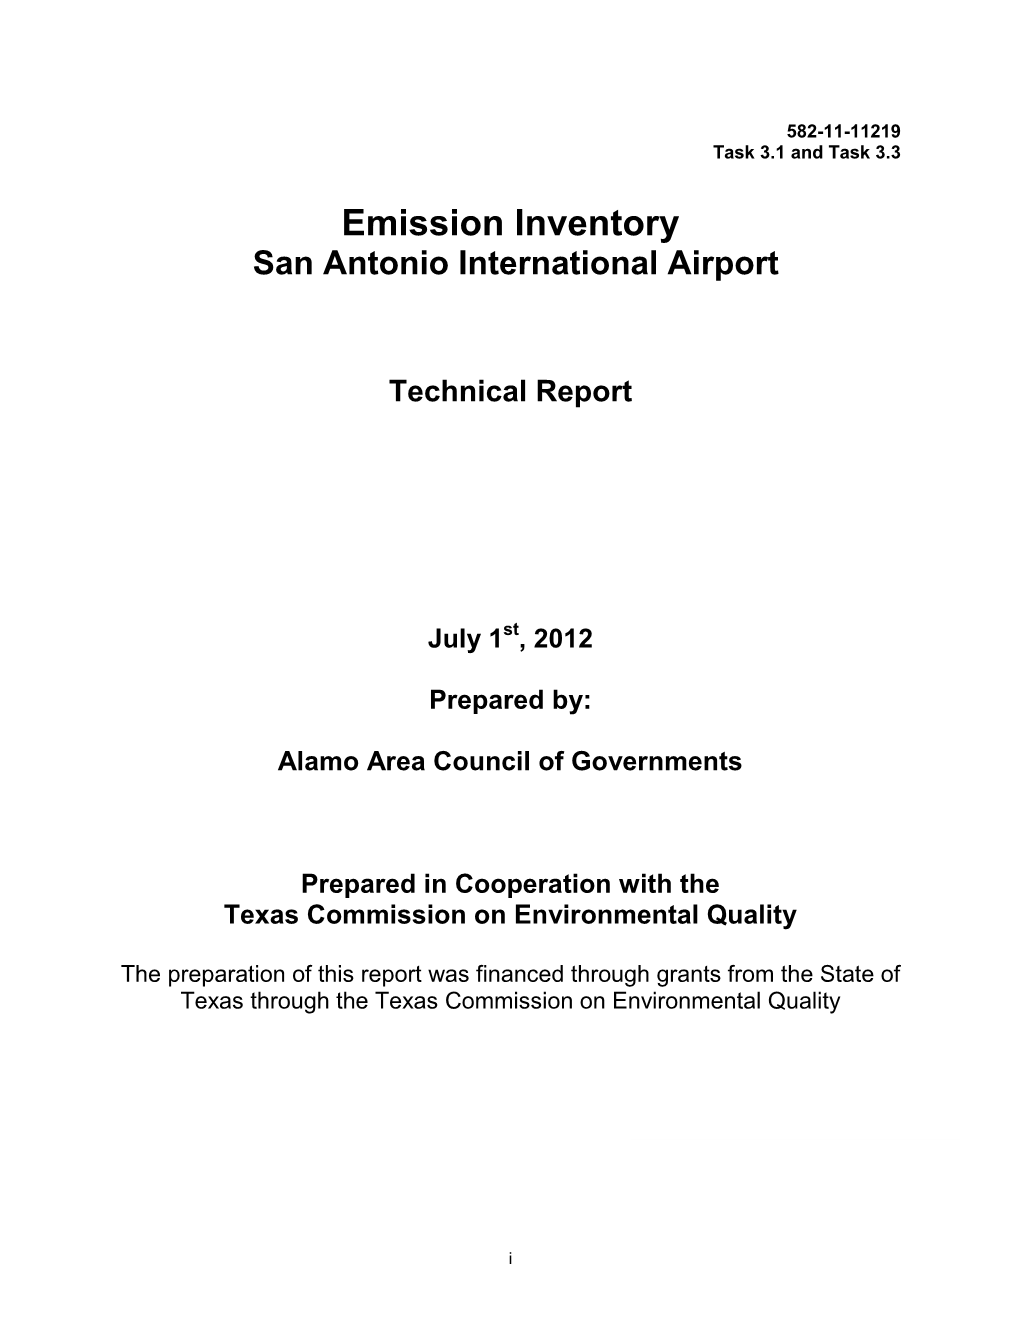 San Antonio International Airport Emission Inventory